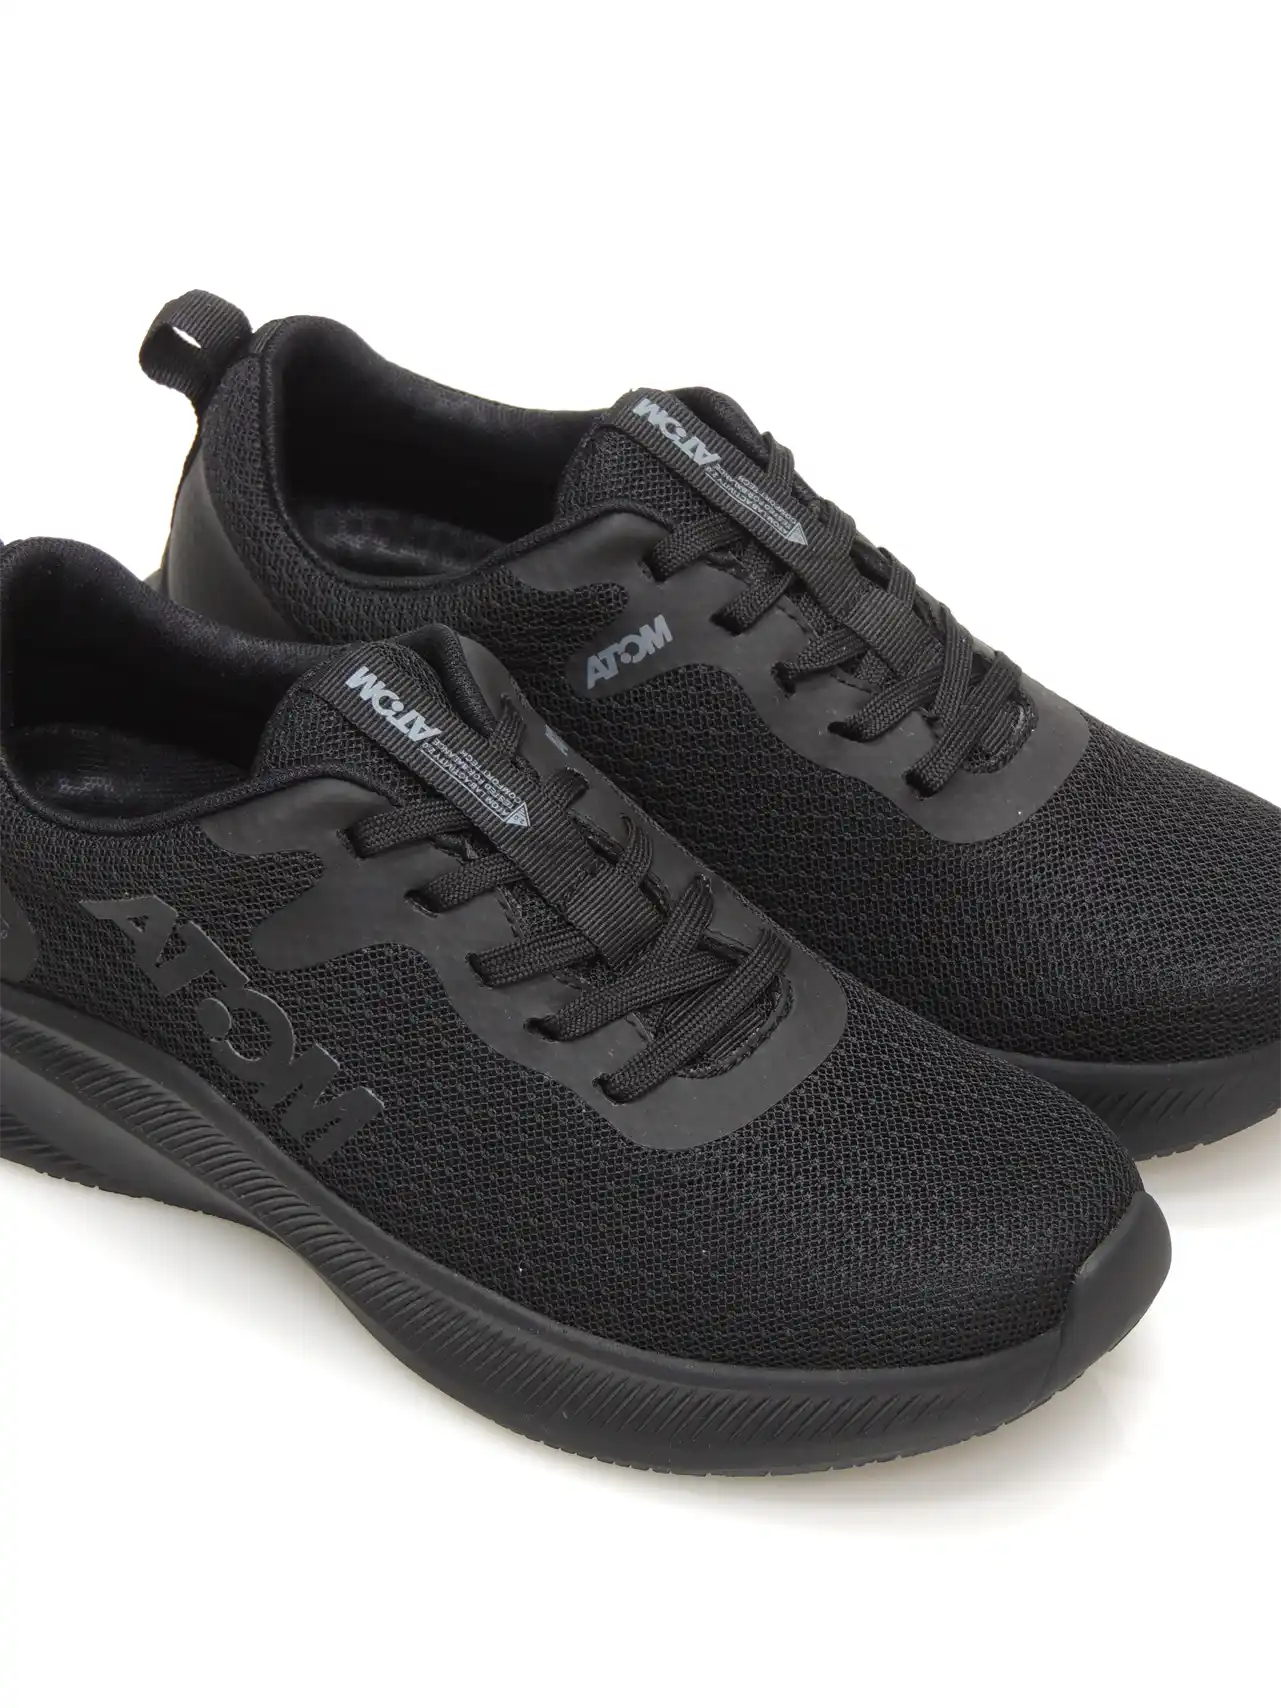 sneakers--fluchos-at129-textil-negro